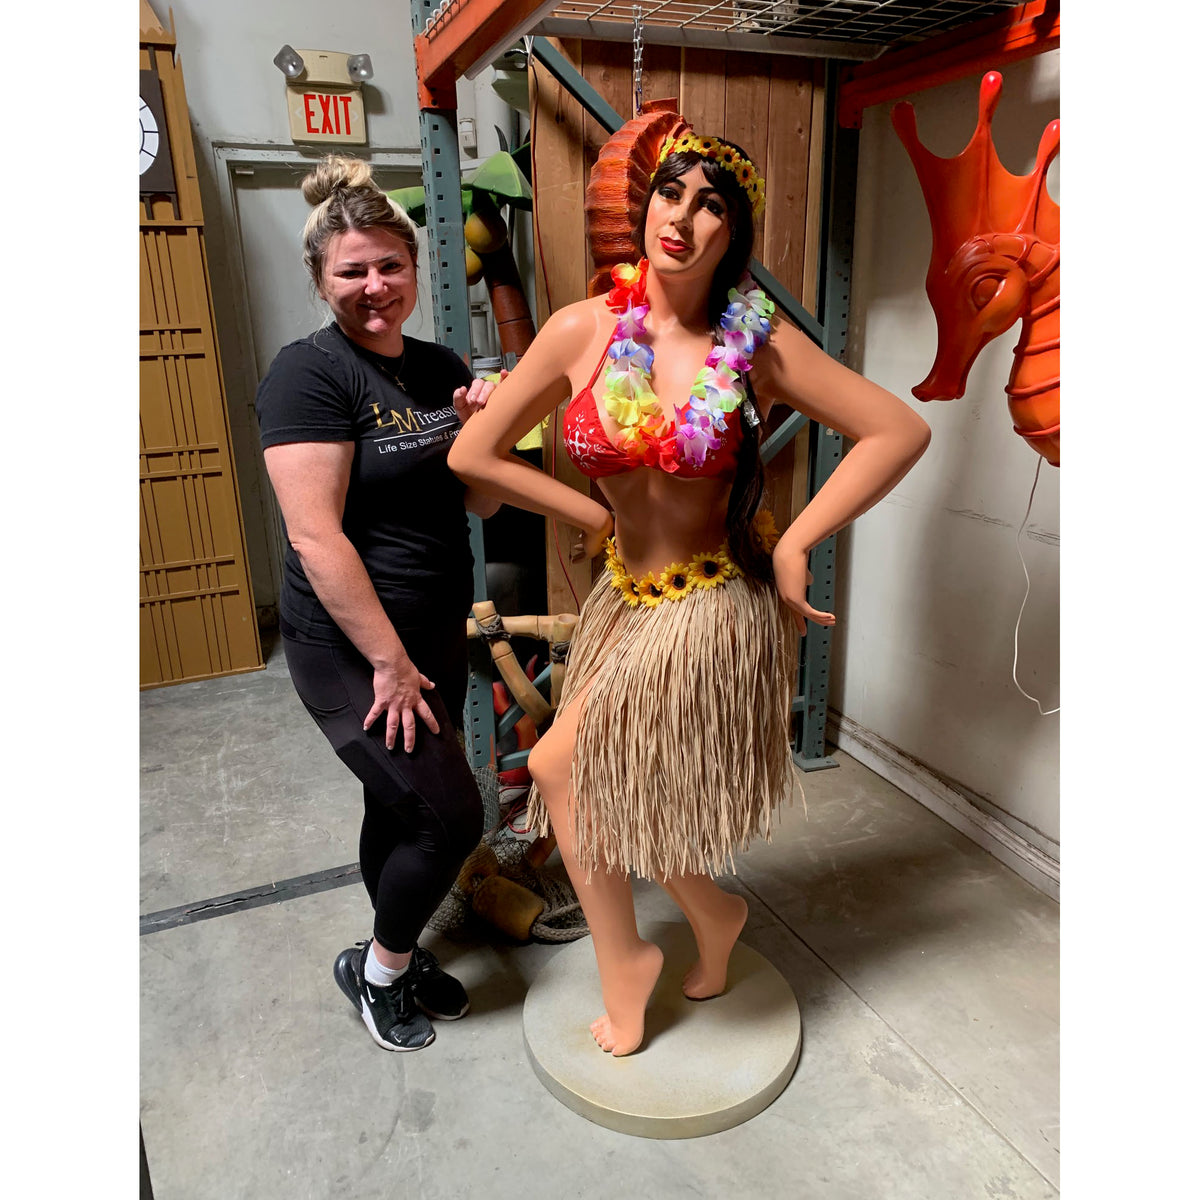 hula girl costume